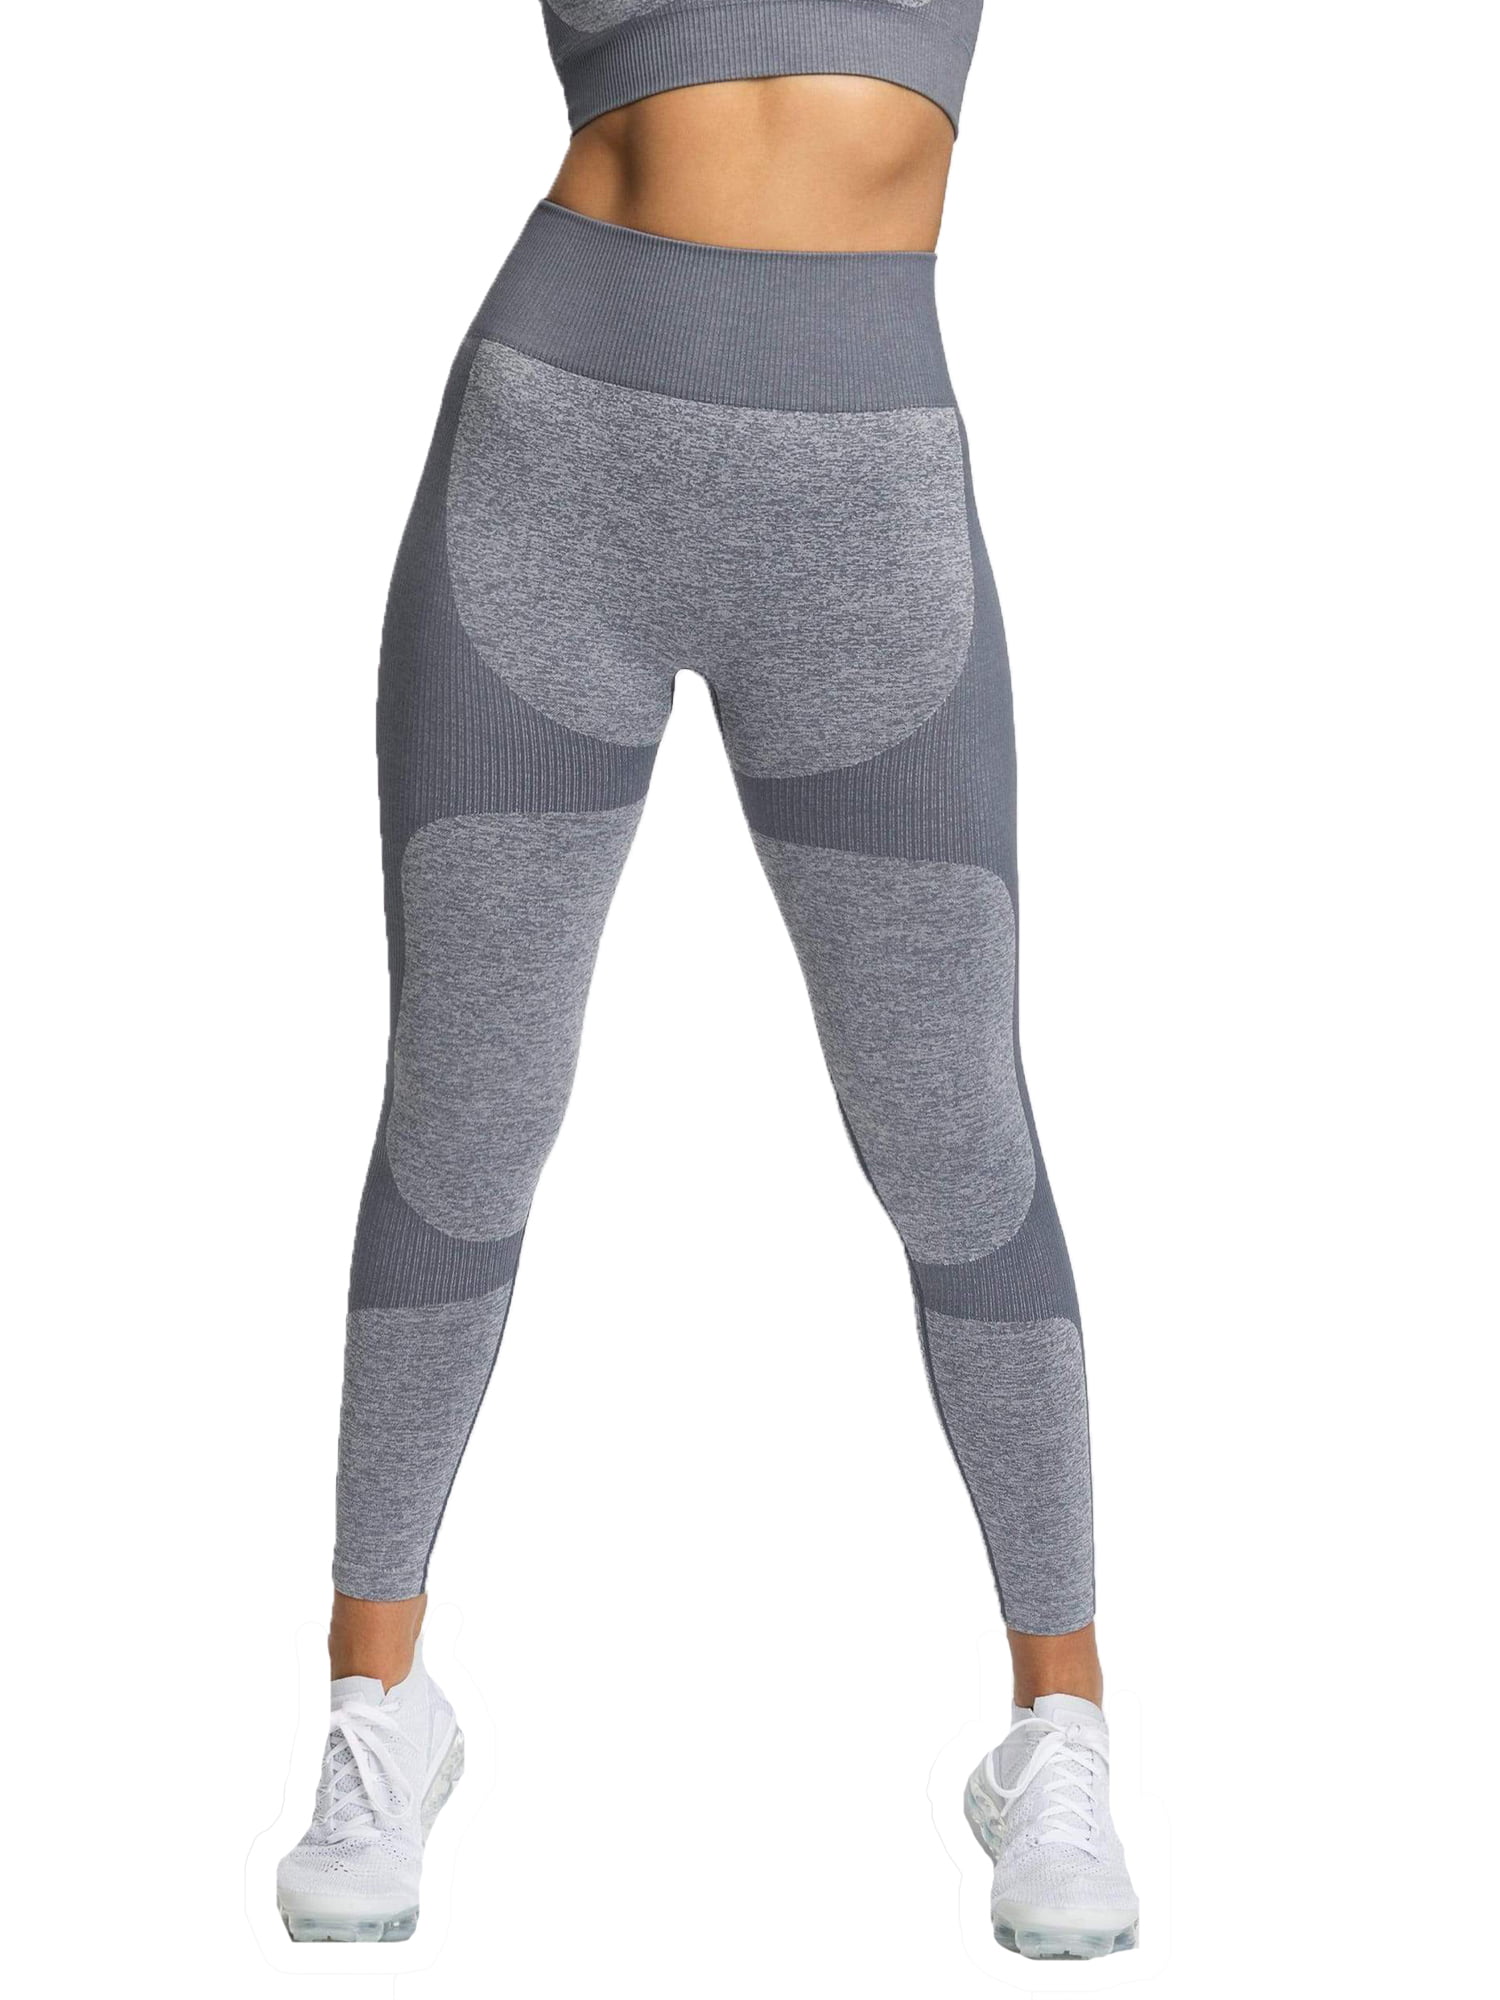 Women Yoga Workout Gym Leggings Fitness Sports Running Trouser Athletic Pants